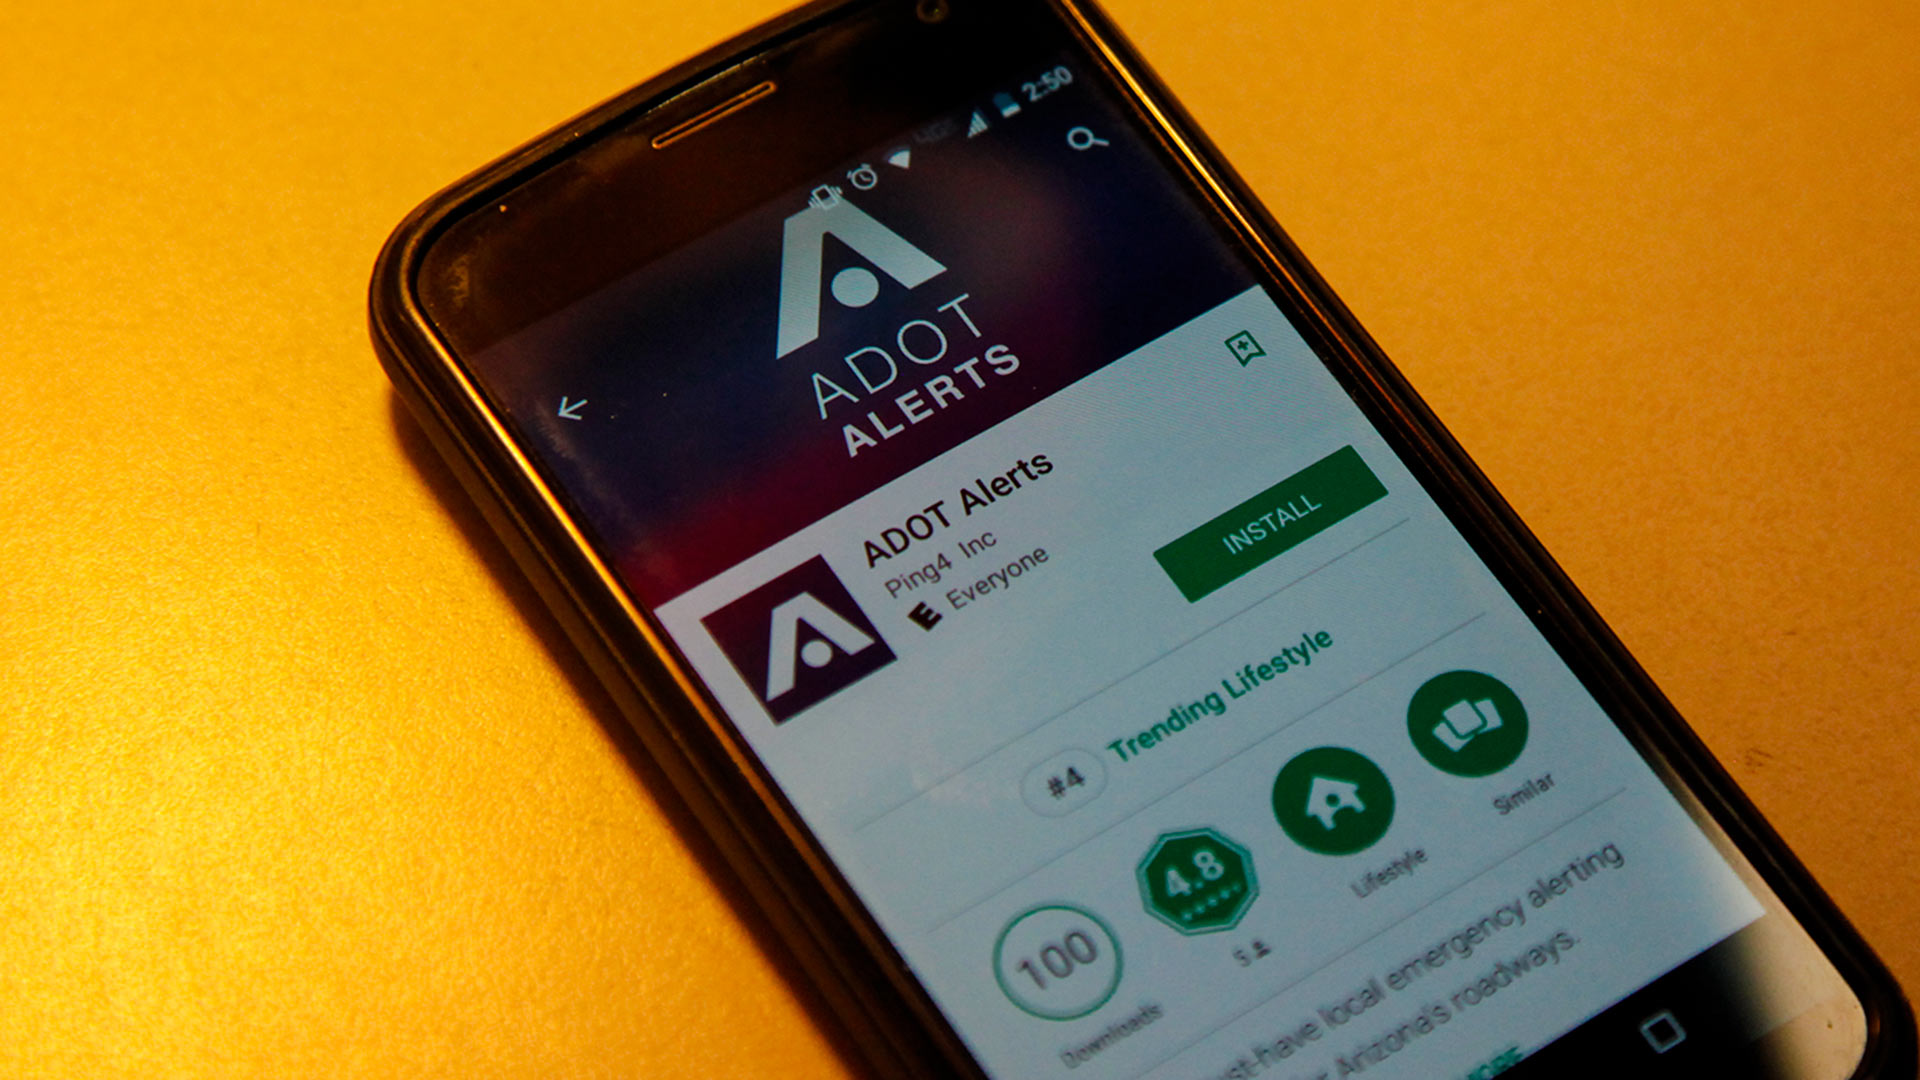 The Arizona Department of Transportation's "ADOT Alerts" app.